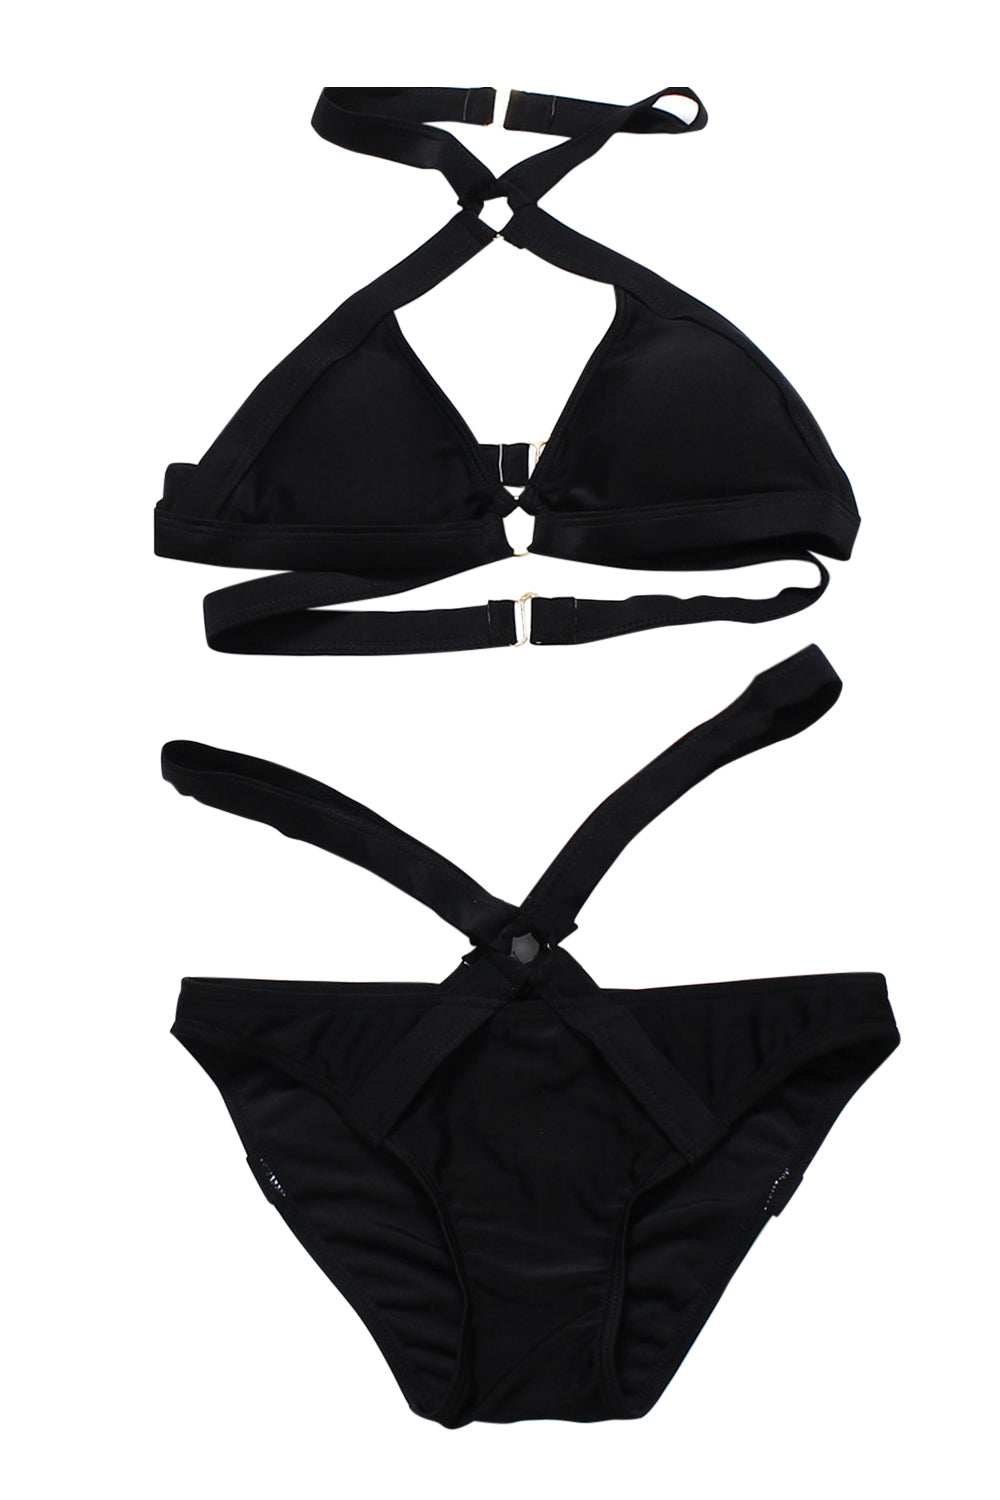 Iyasson Sexy Black Front Cross Triangle Top Bikini Set